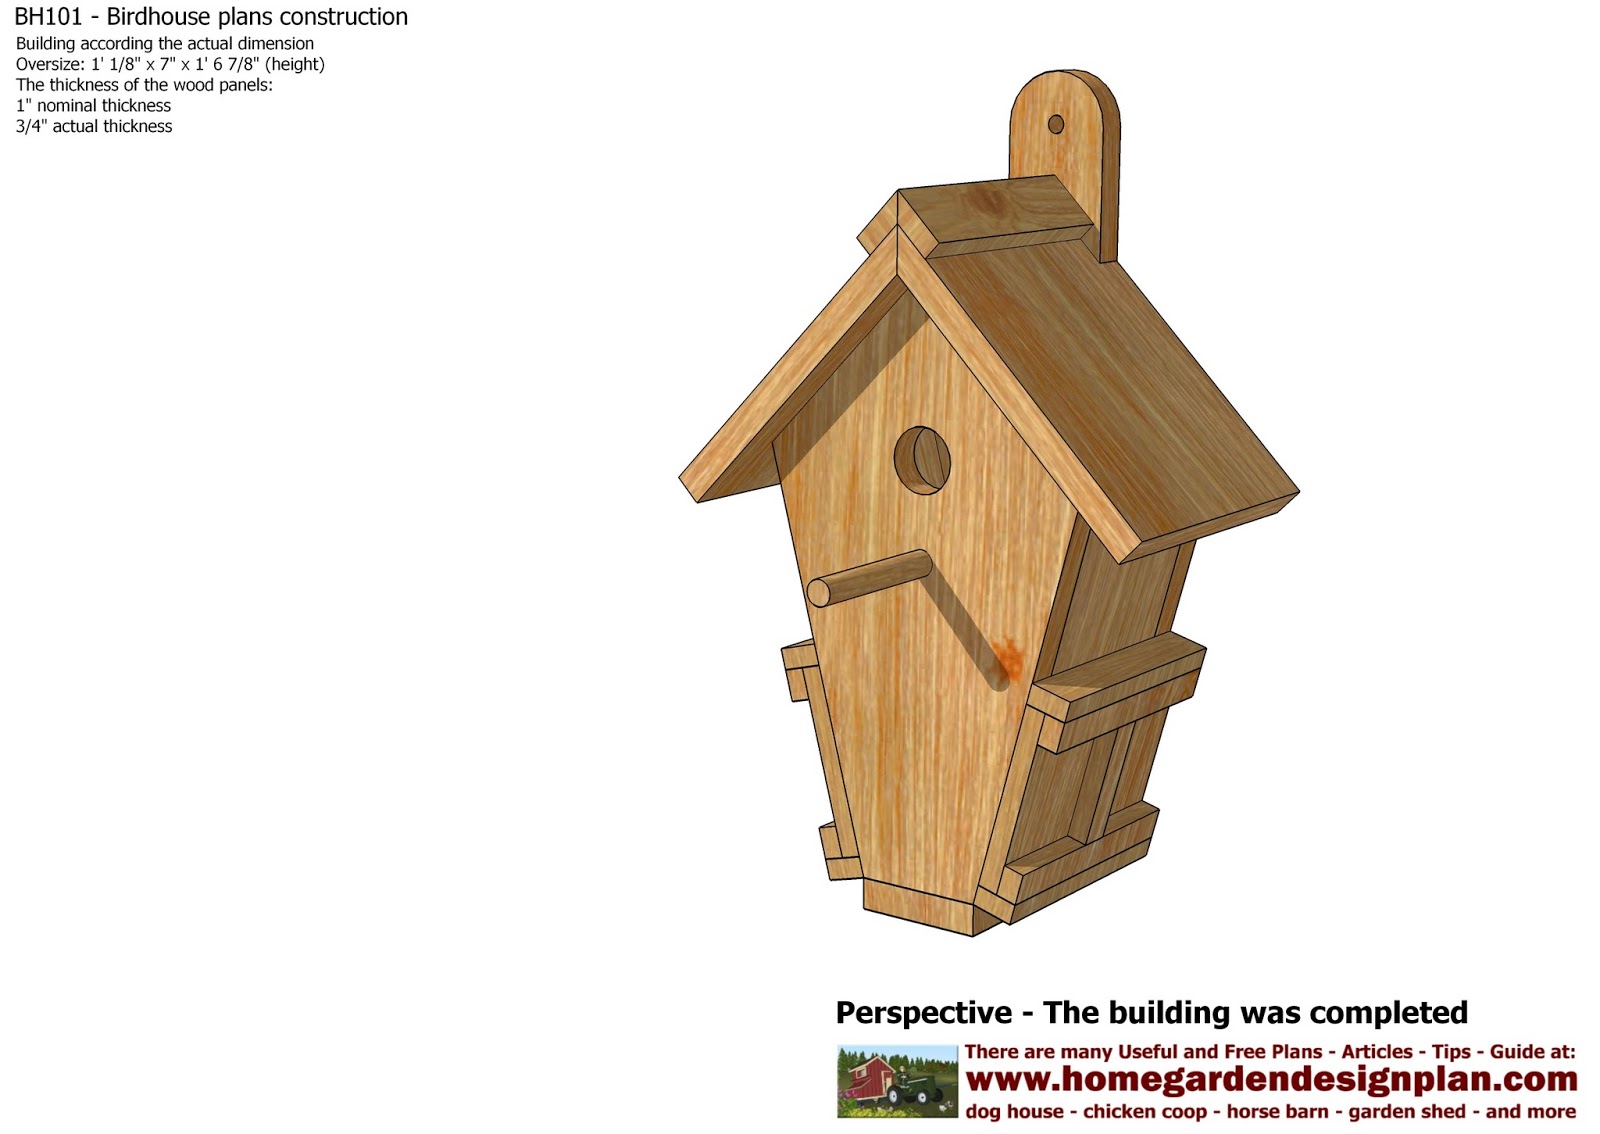  House Plans Construction - Bird House Design - How To Build A Bird